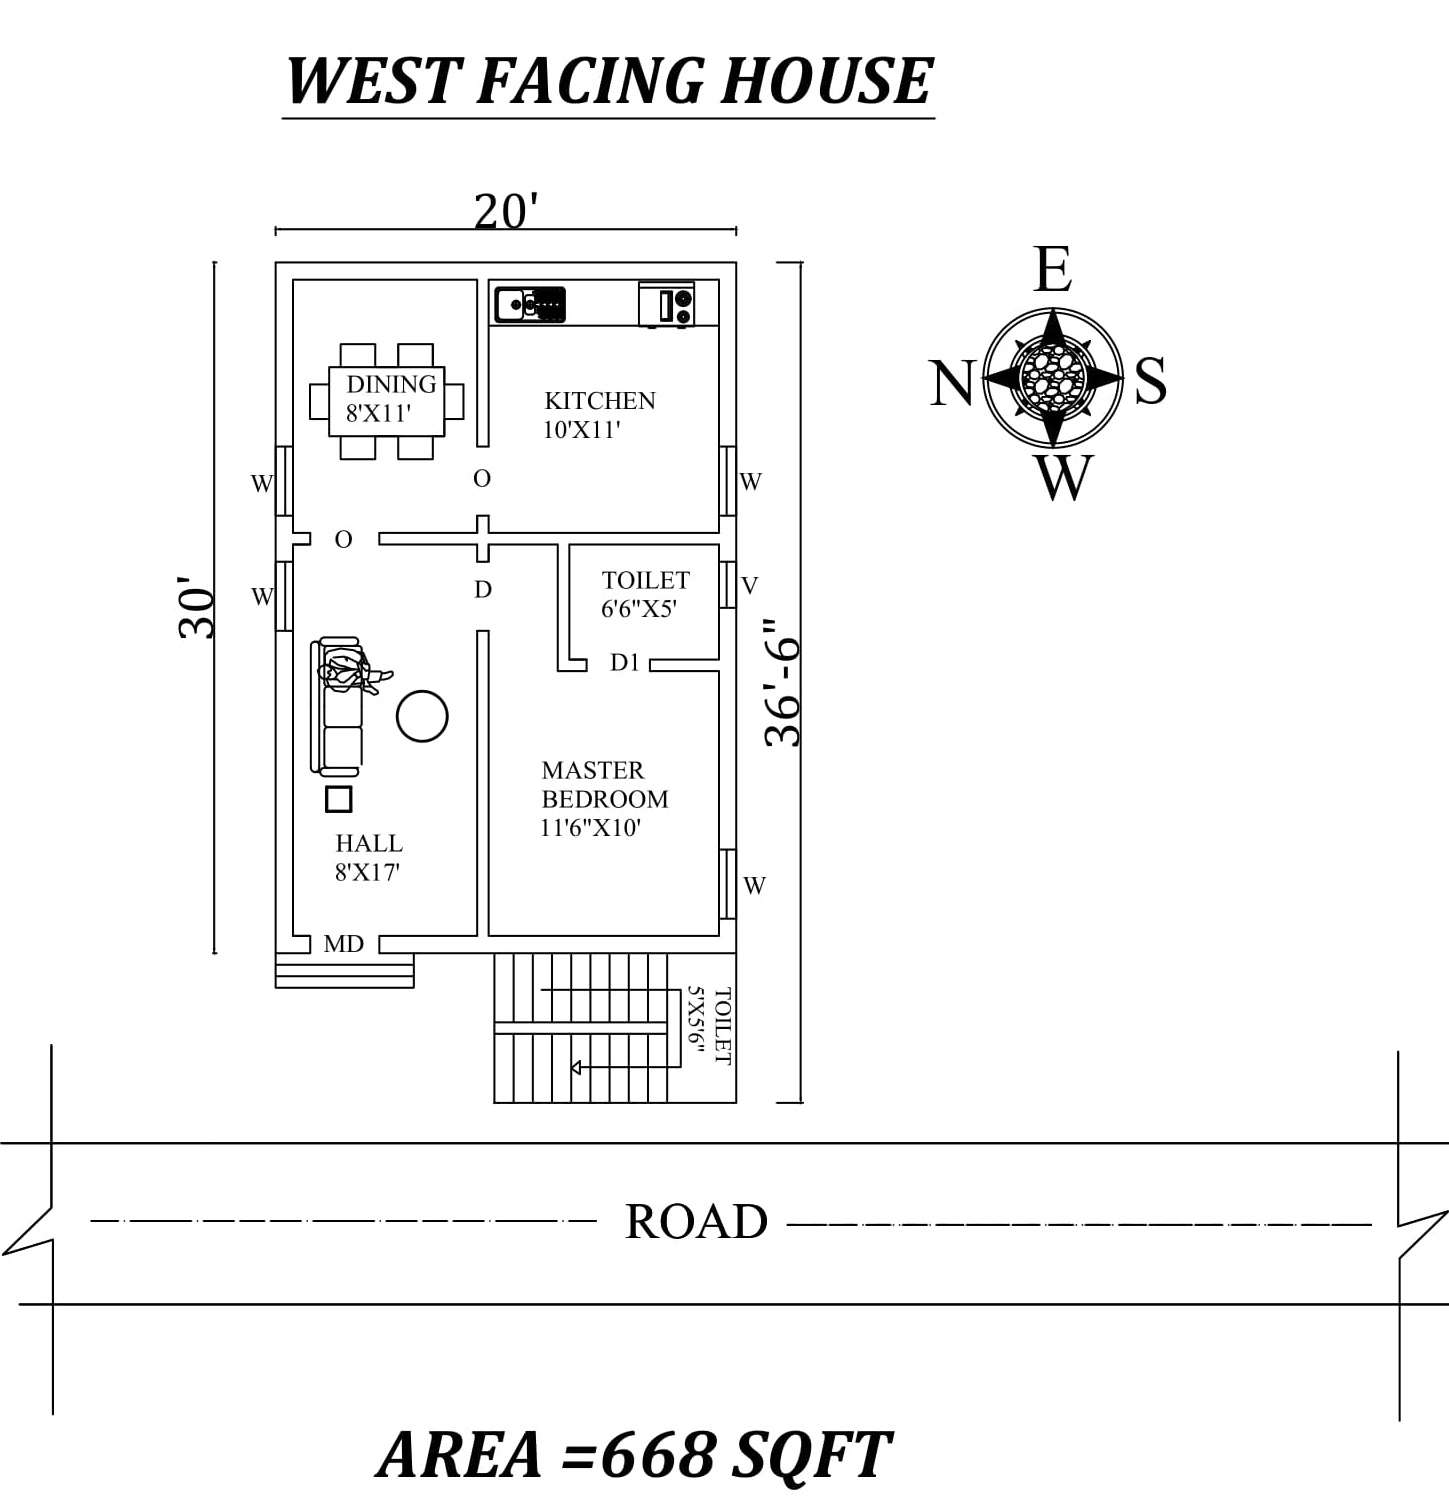 20'X30' Single bhk West facing House Plan As Per Vastu Shastra,Autocad